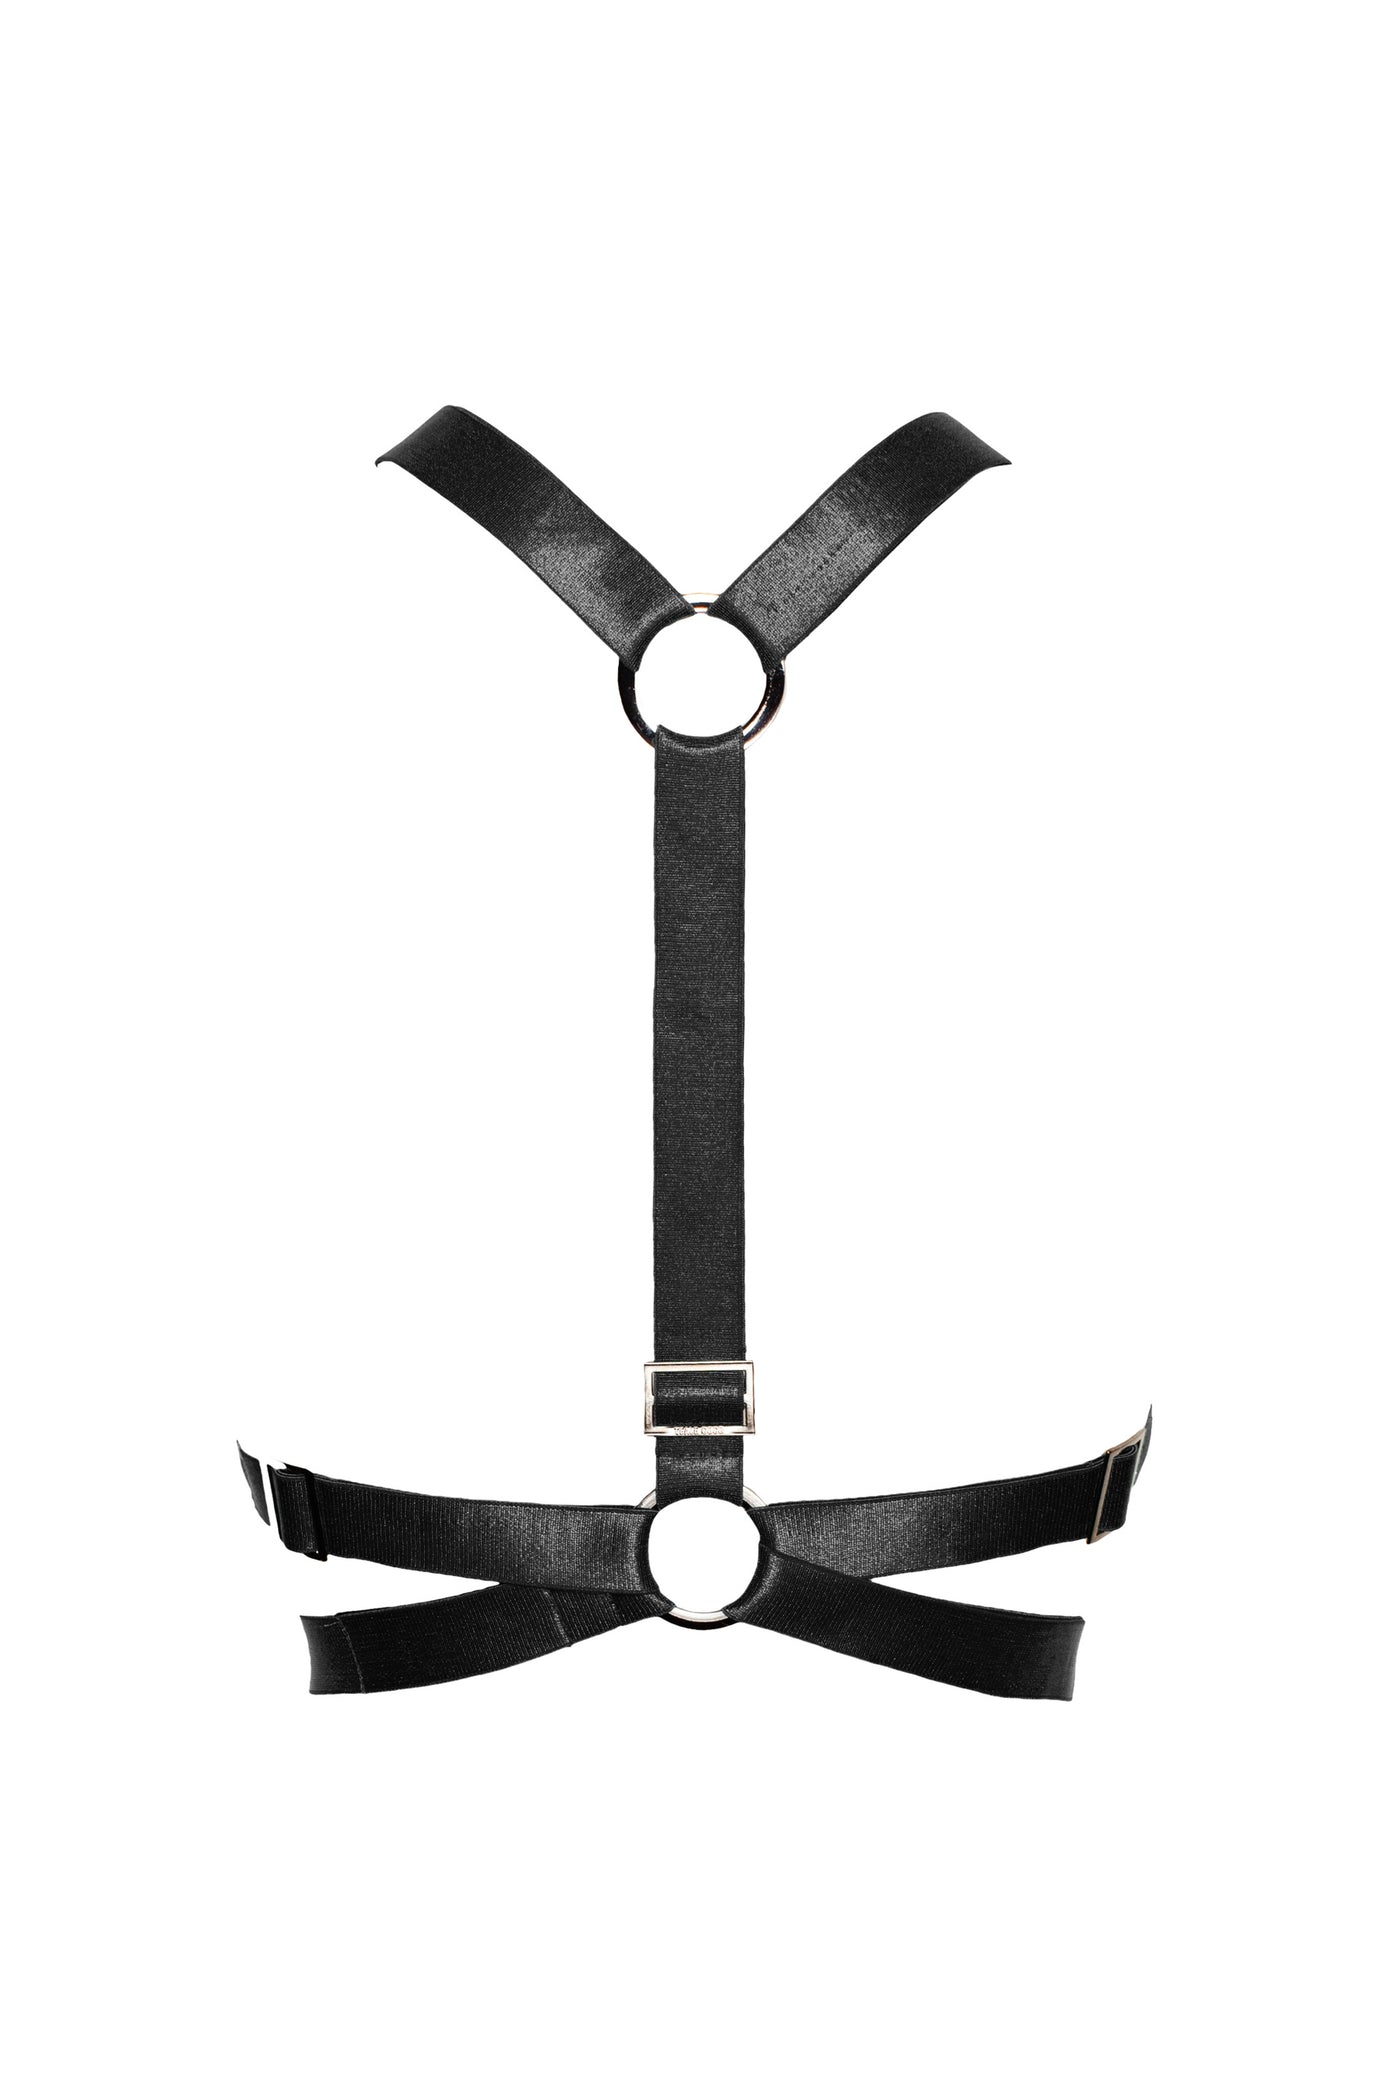 X Crop Harness (Black)